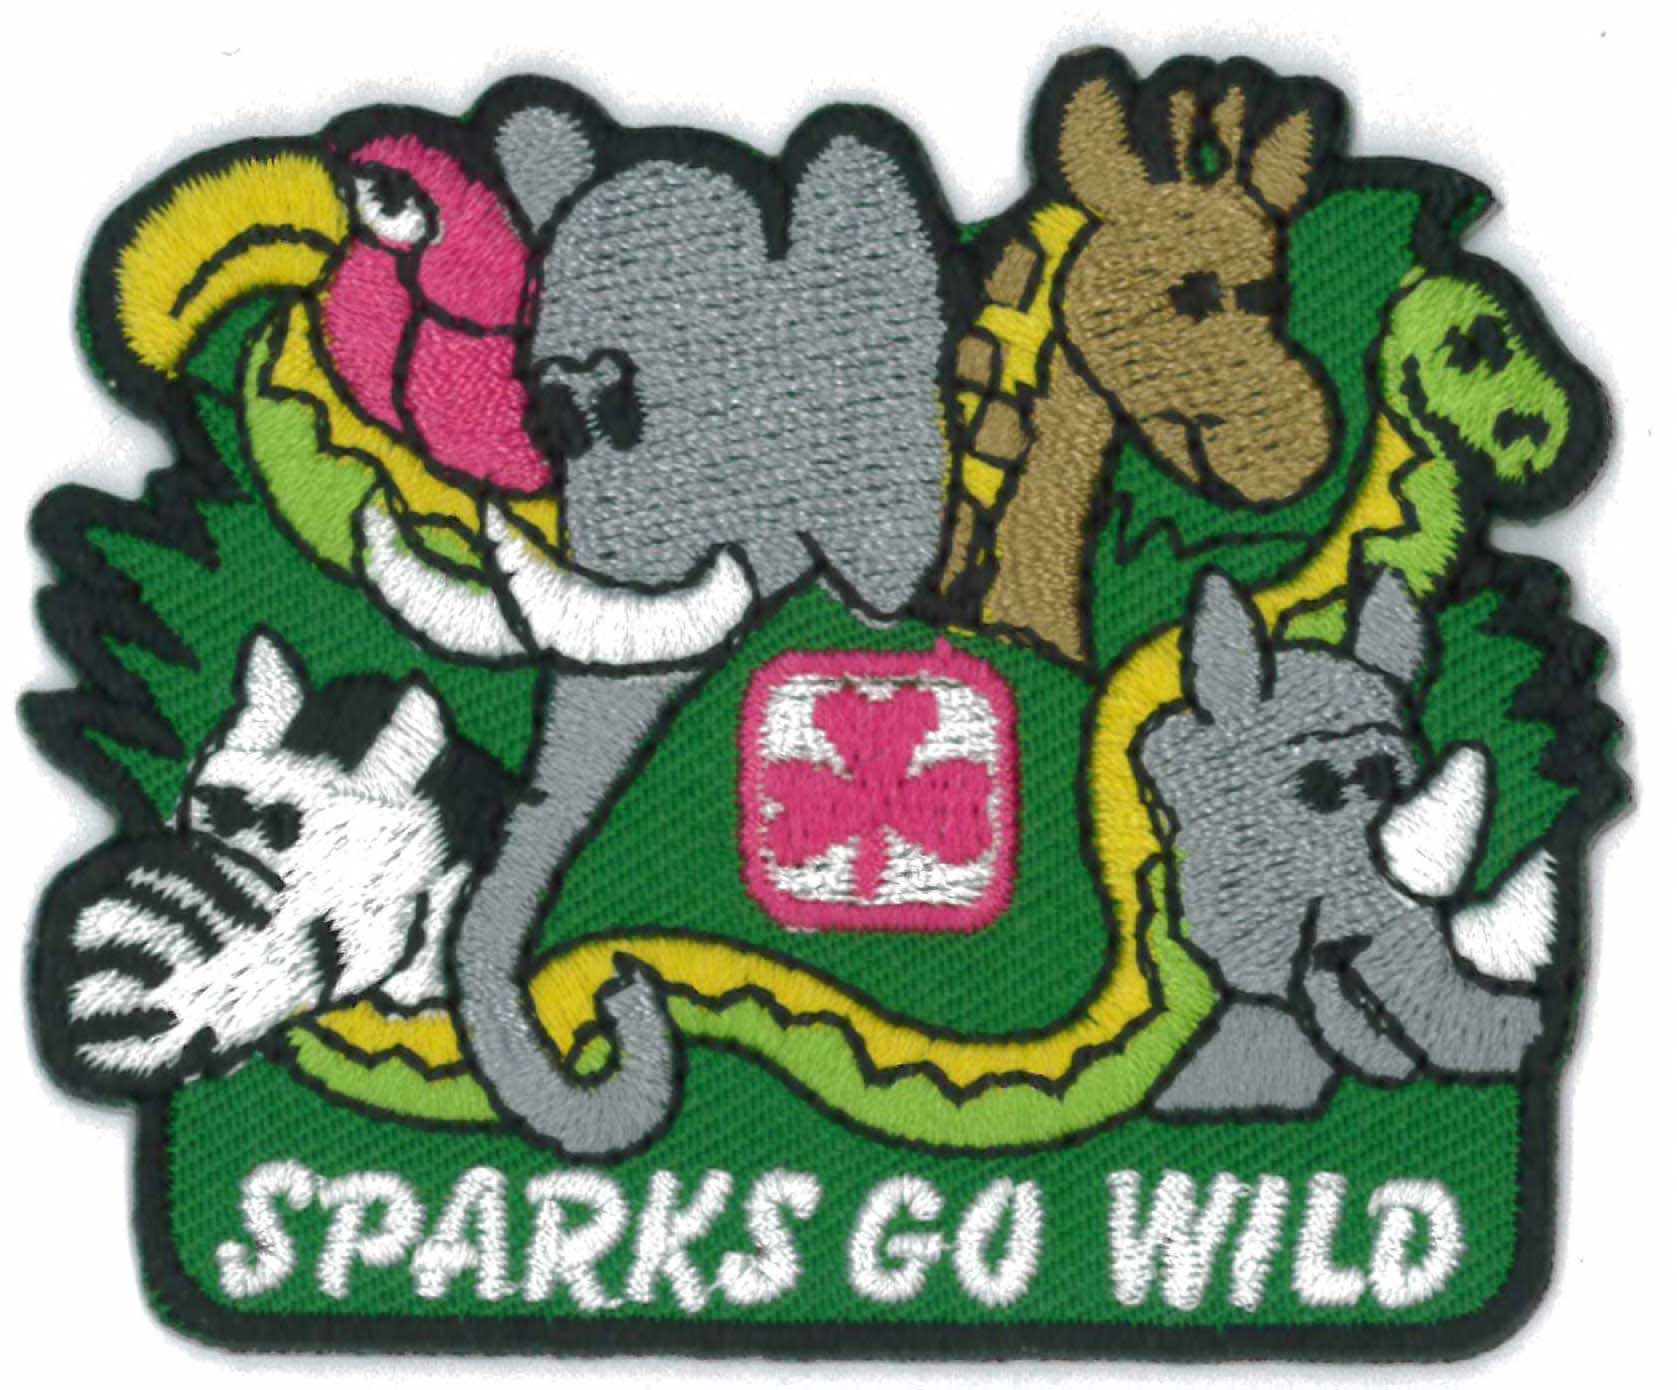 Wild sparks go Georgina Sparks